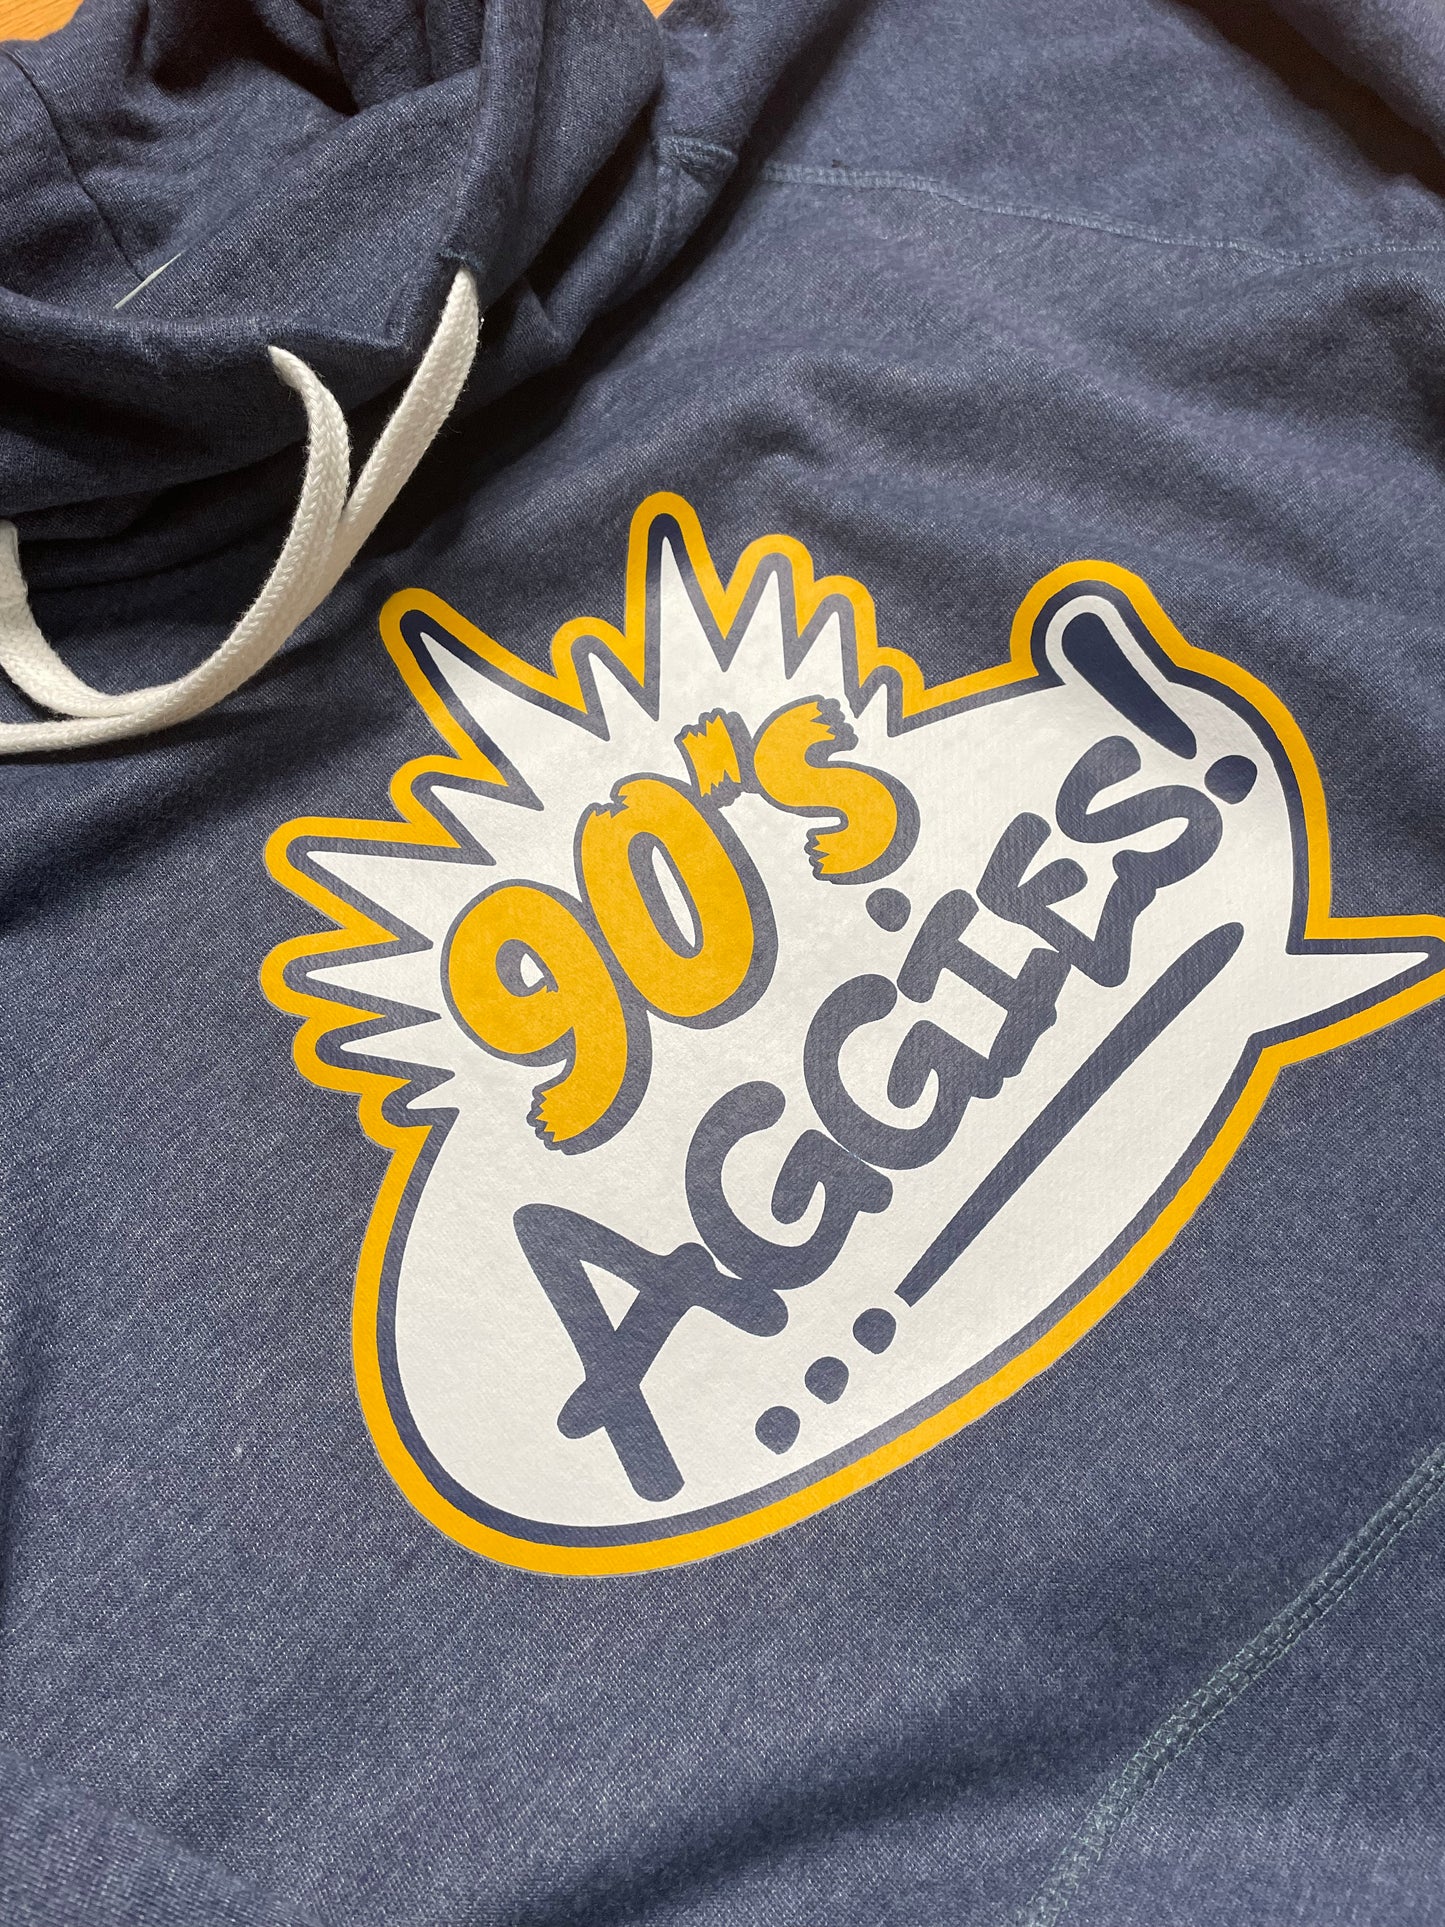 90's Aggies Ladies Cowl Neck Sweatshirt